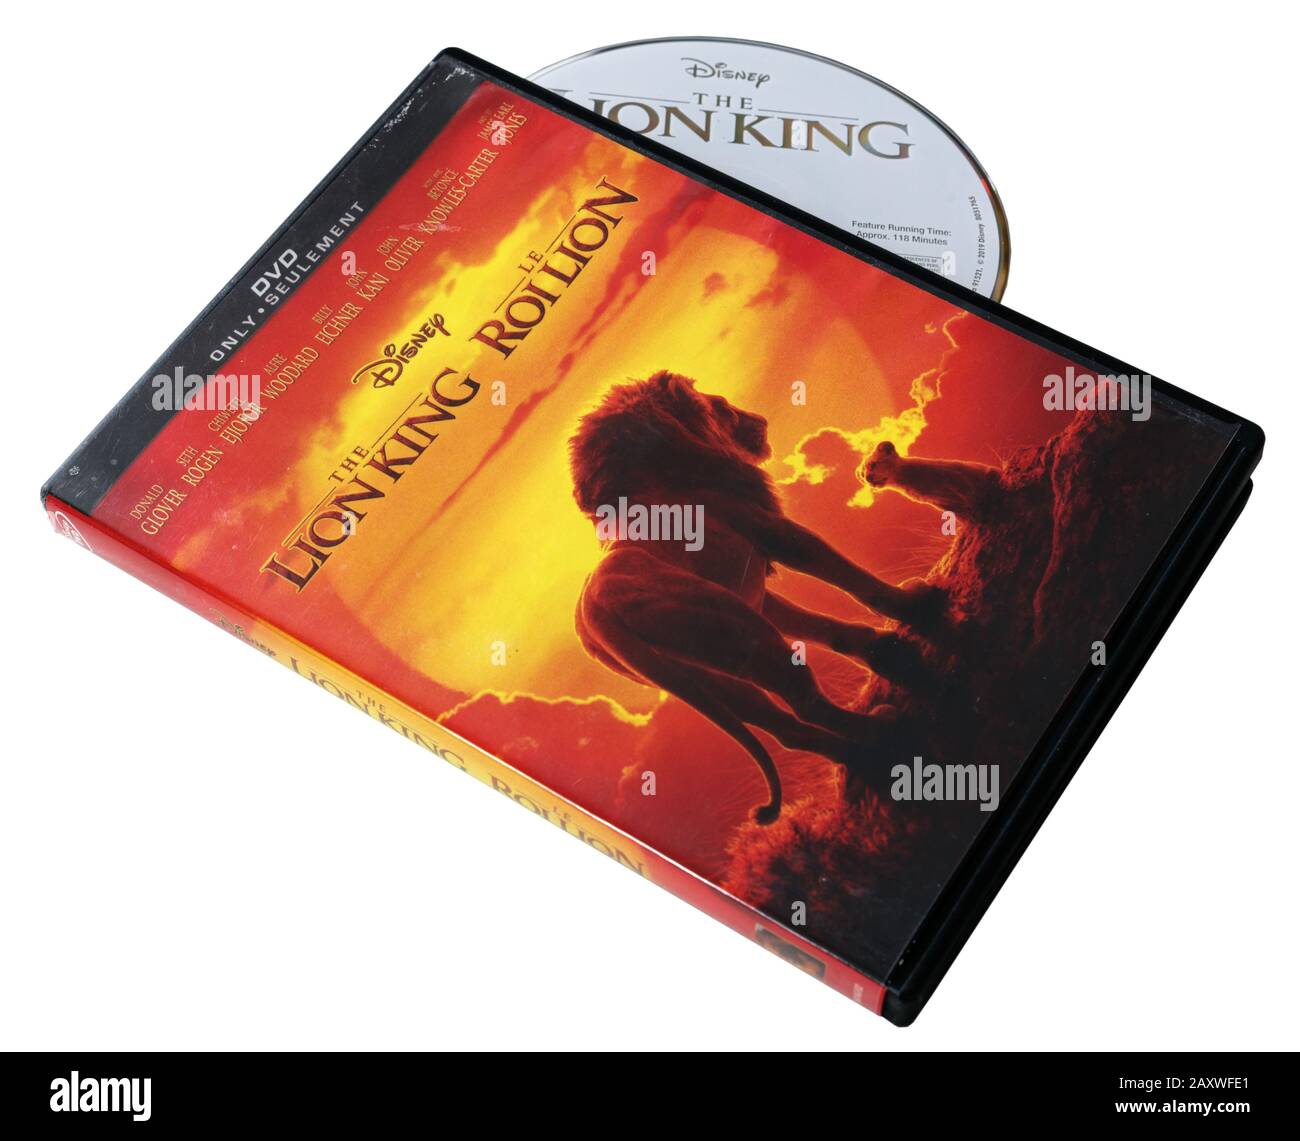 The Lion King film on DVD Stock Photo - Alamy